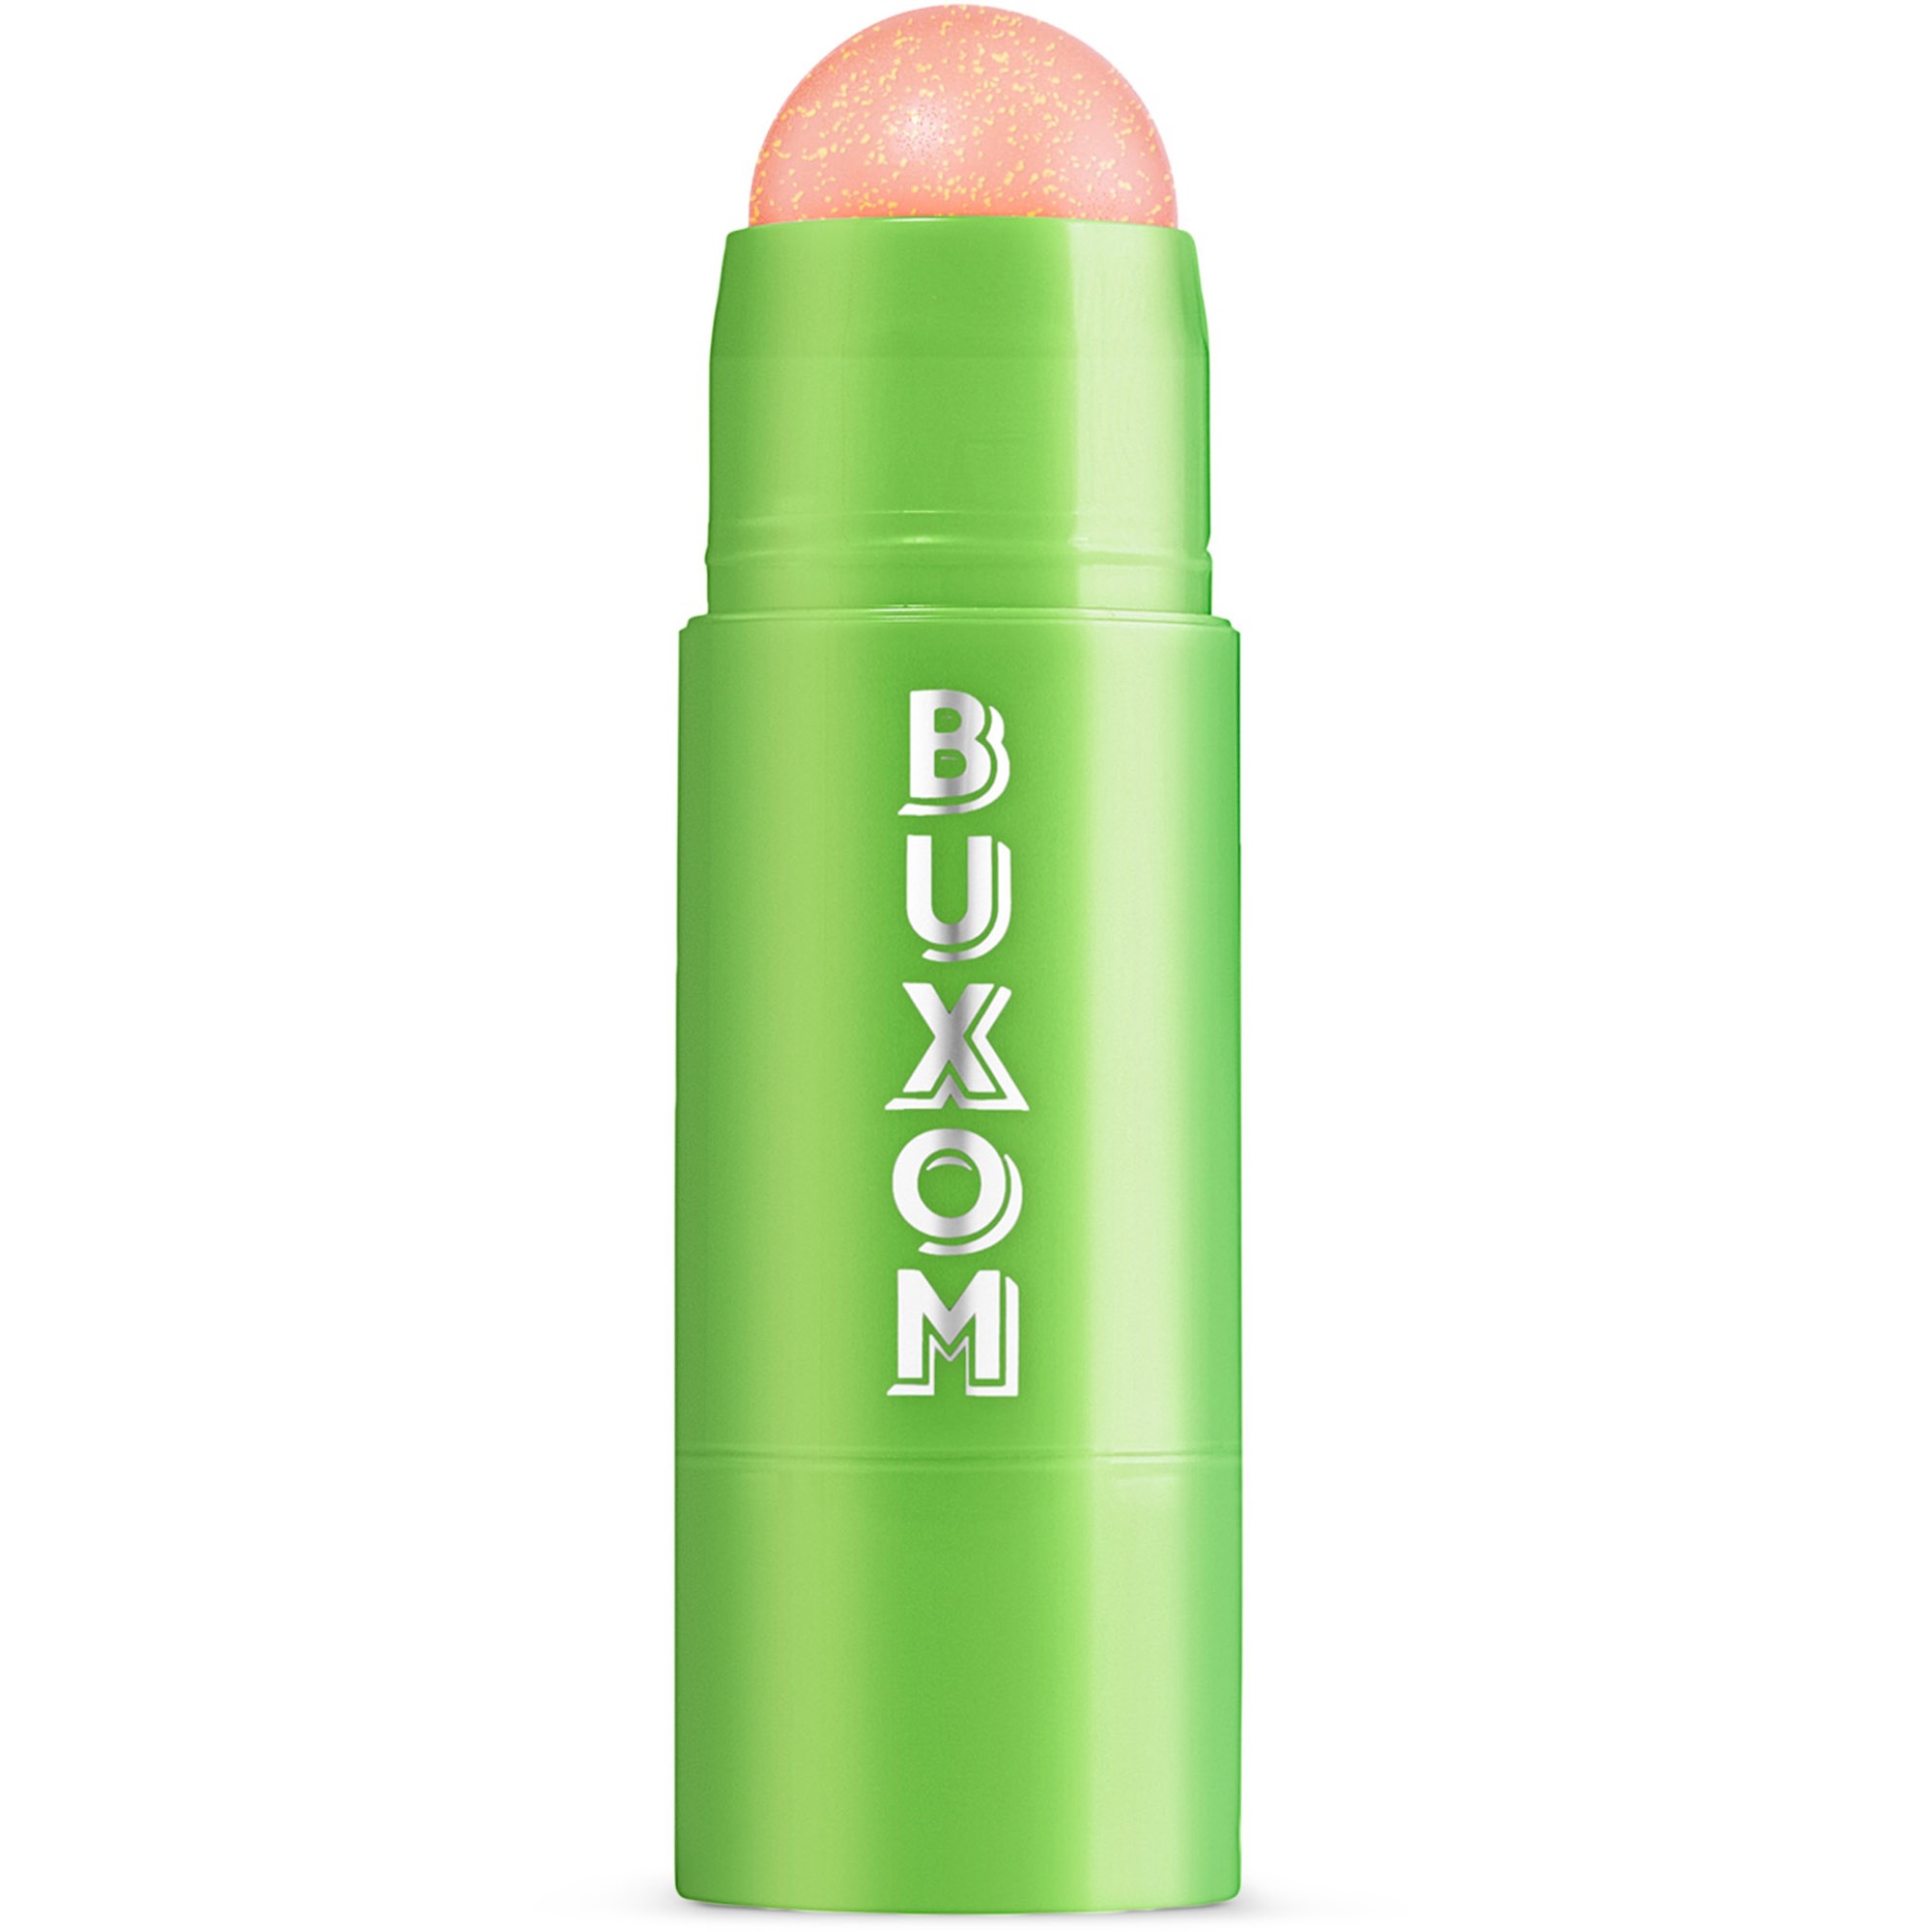 BUXOM Powerfull Plump Lip Balm Scrub Sweet Guava